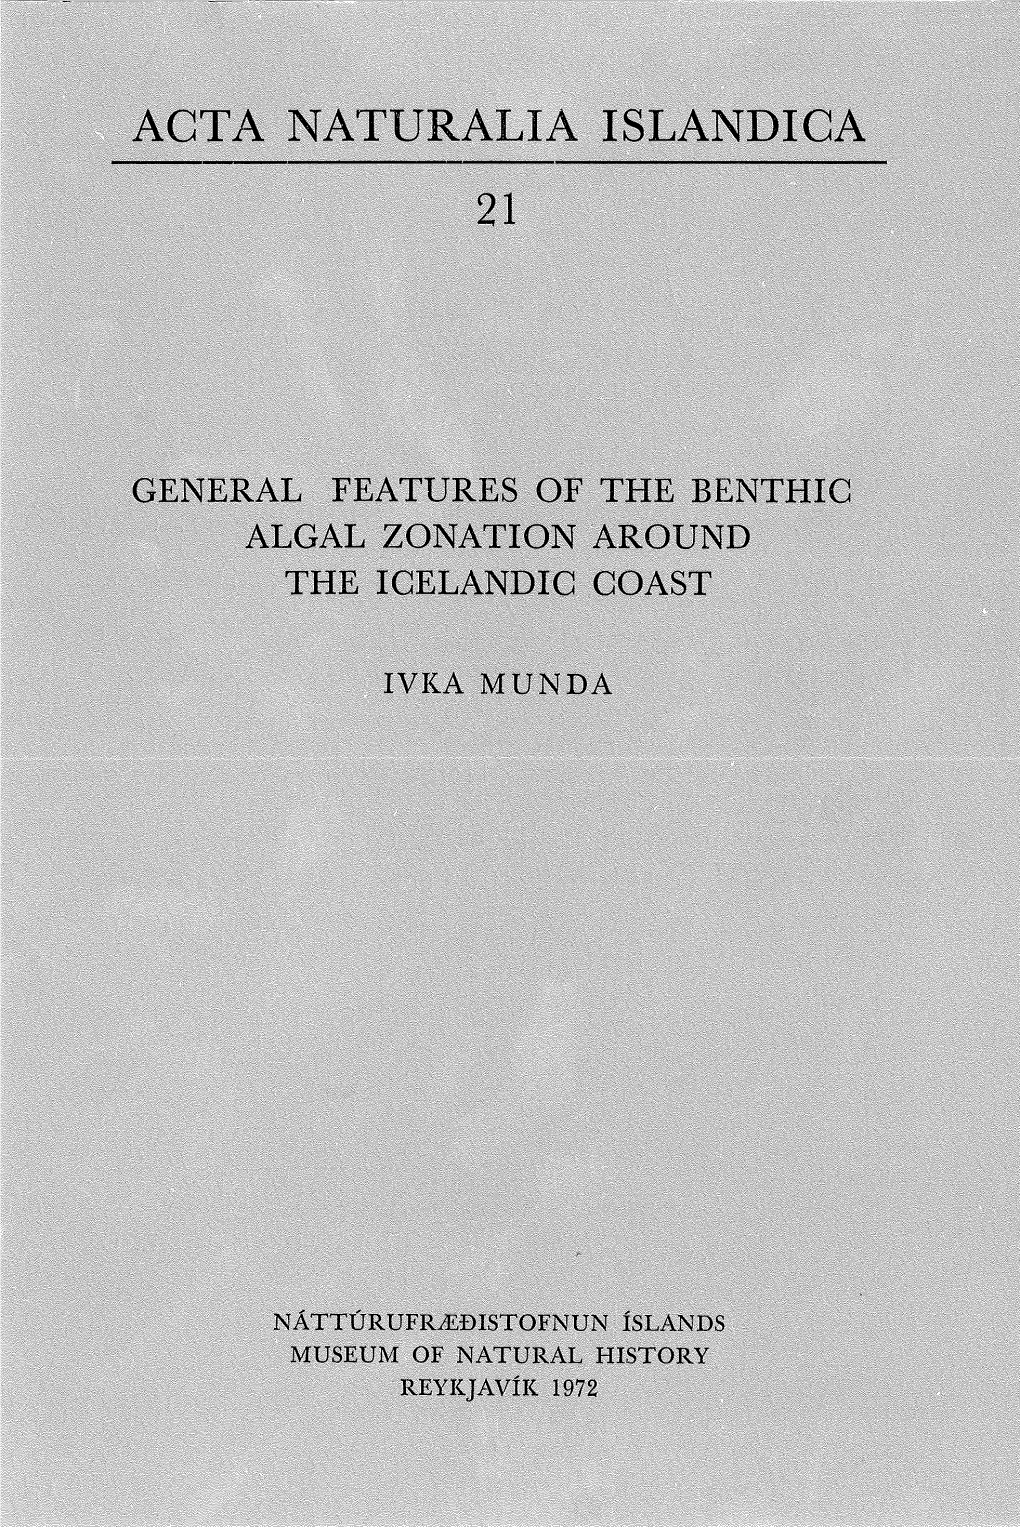 General Zonation Features Around of the Benthic the Icelandic Algal Coast